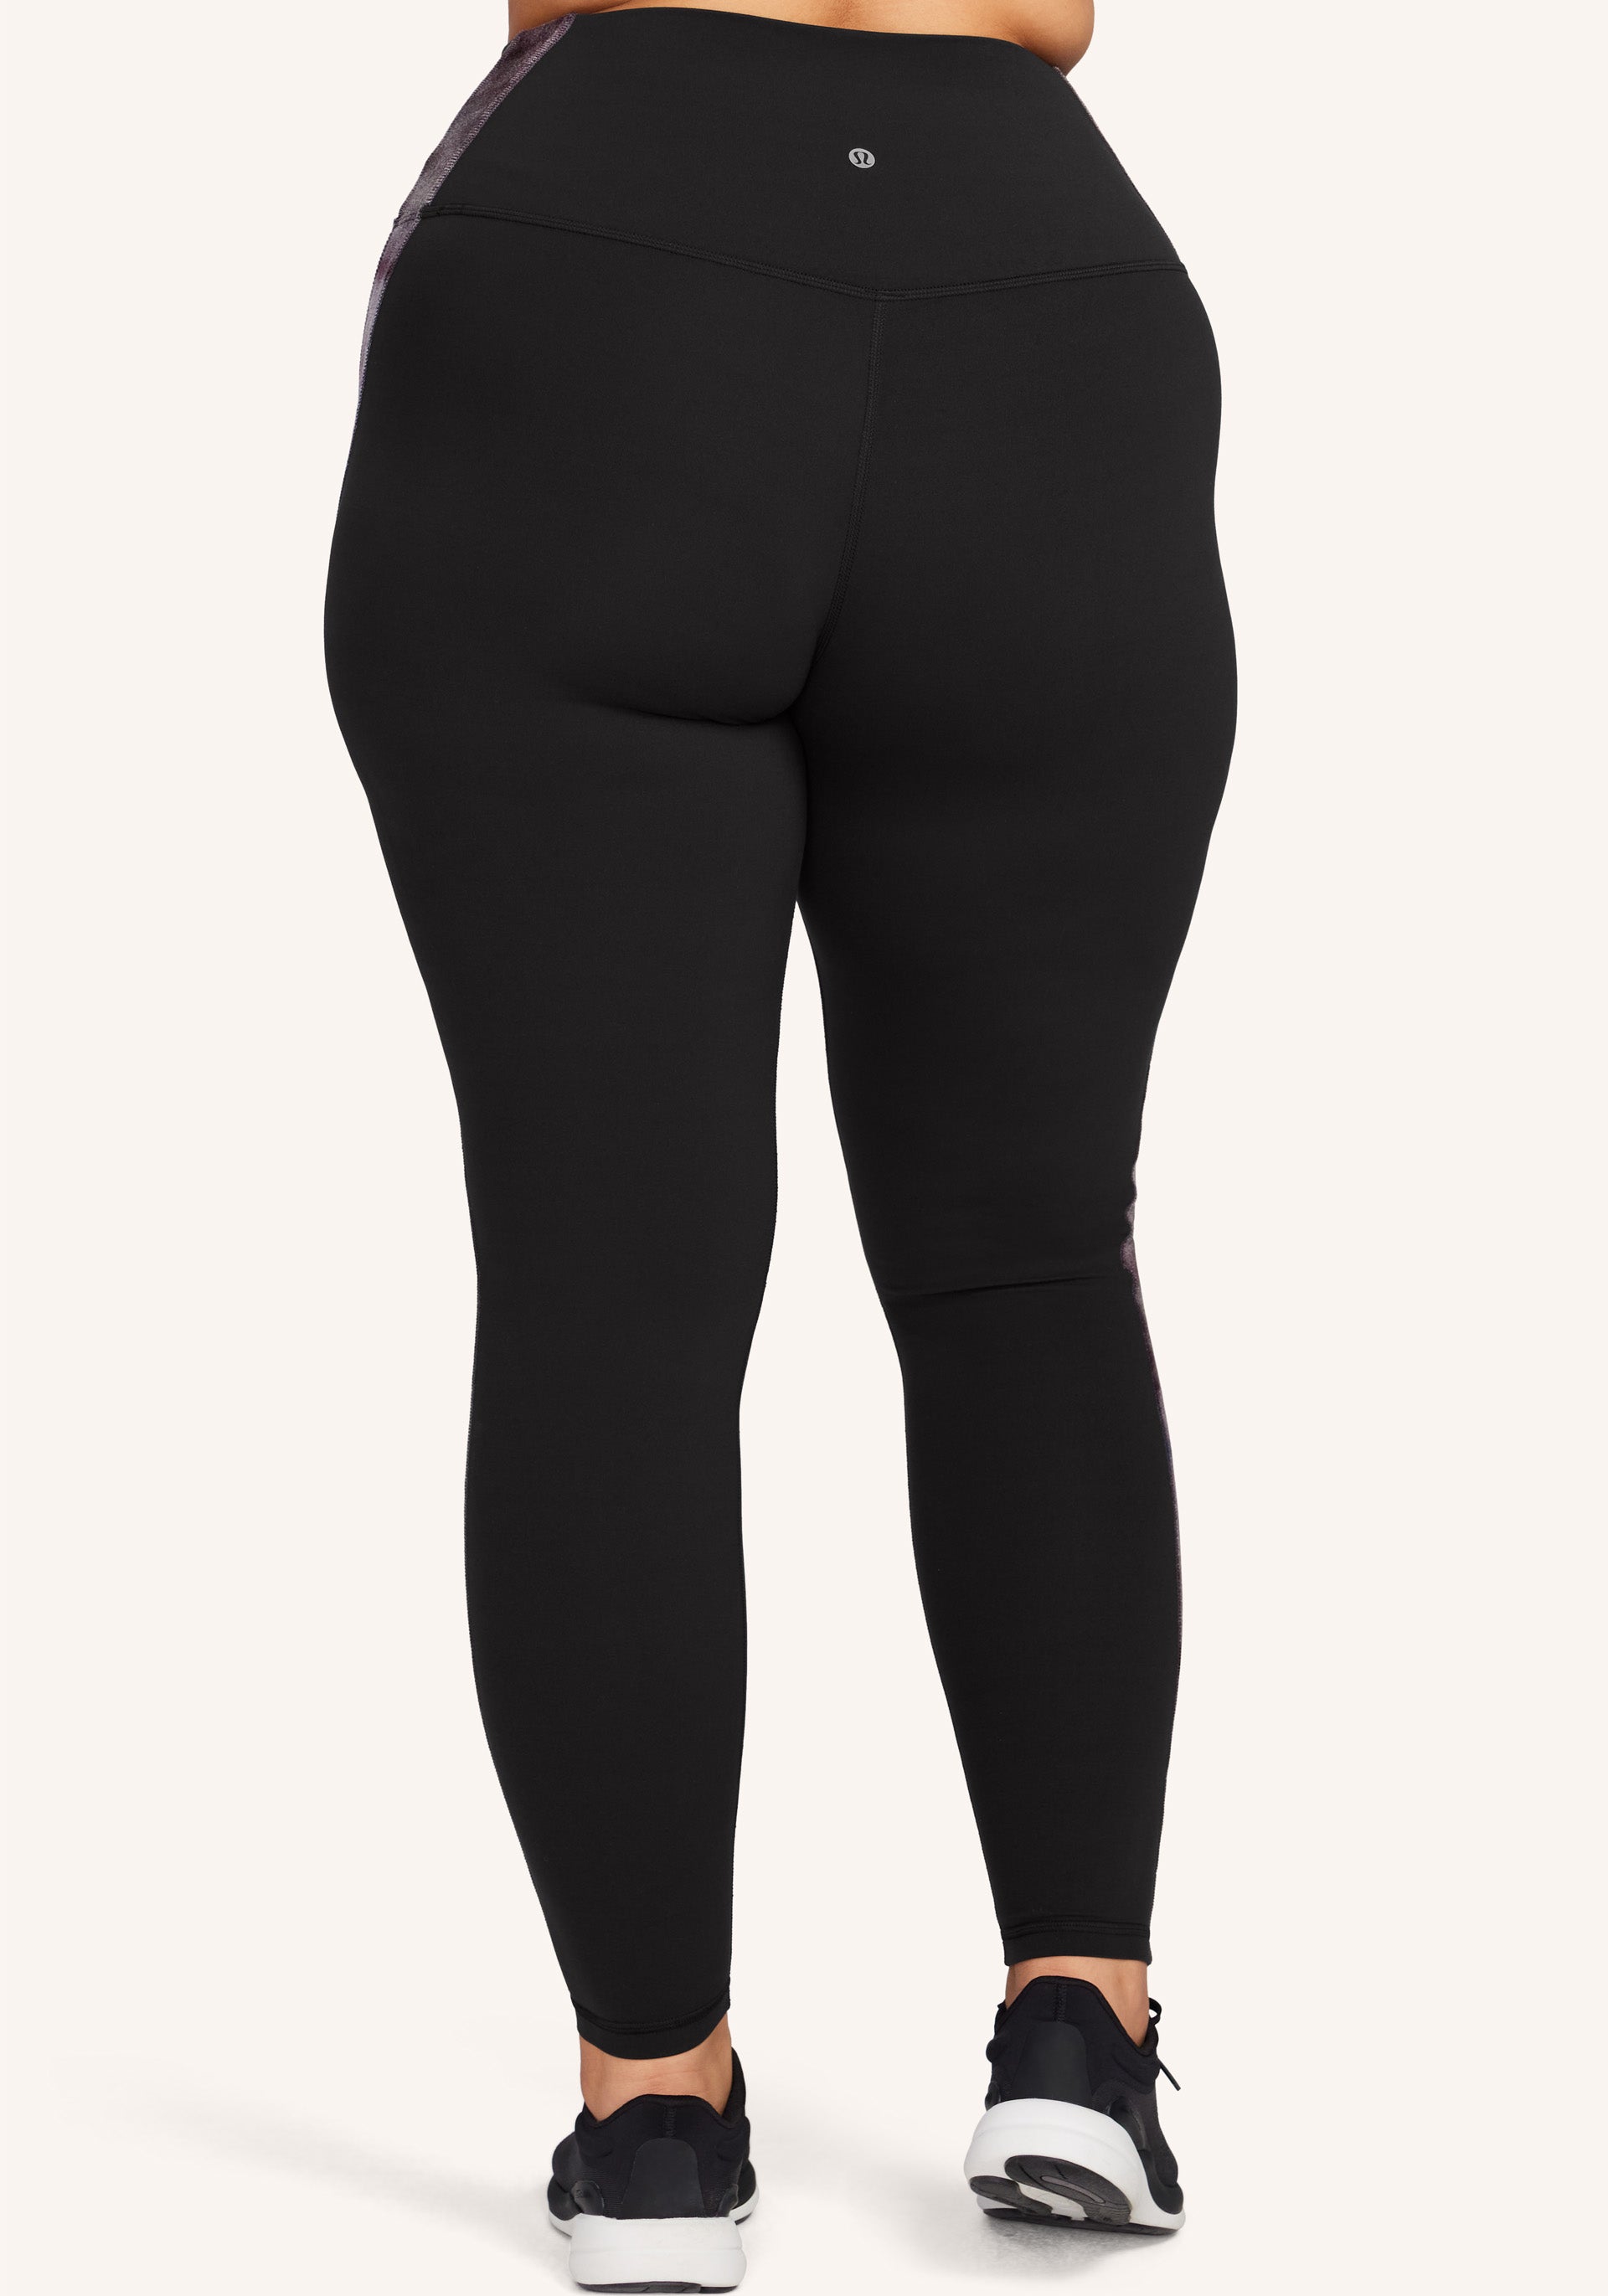 Align Pant 28, Women's Pants, lululemon